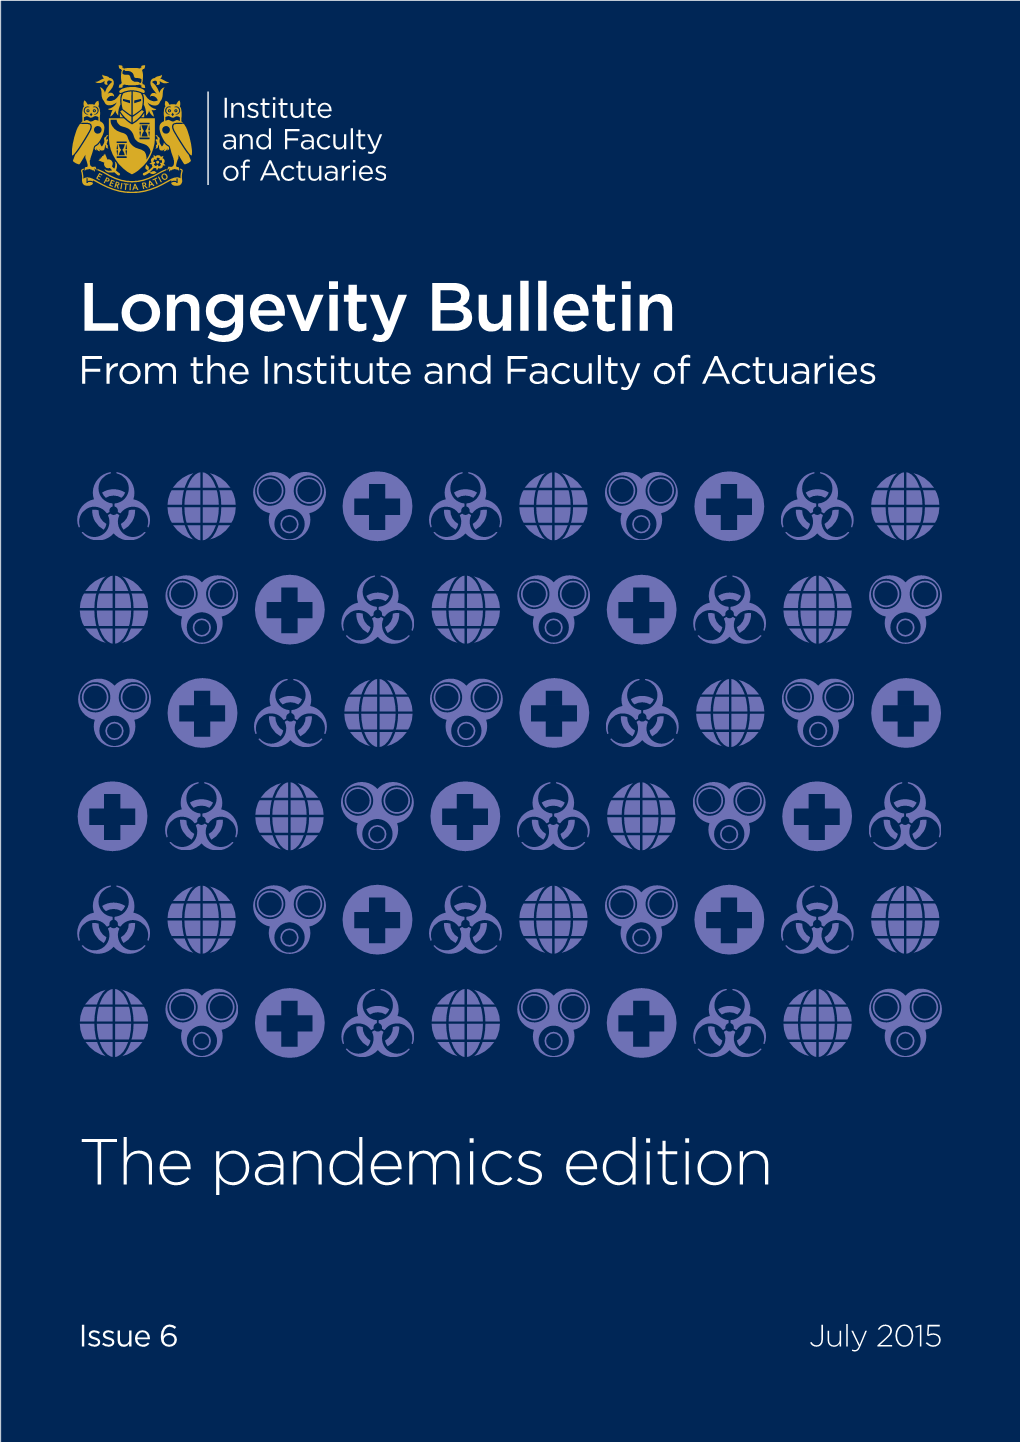 Longevity Bulletin: Pandemic Edition (Issue 6)